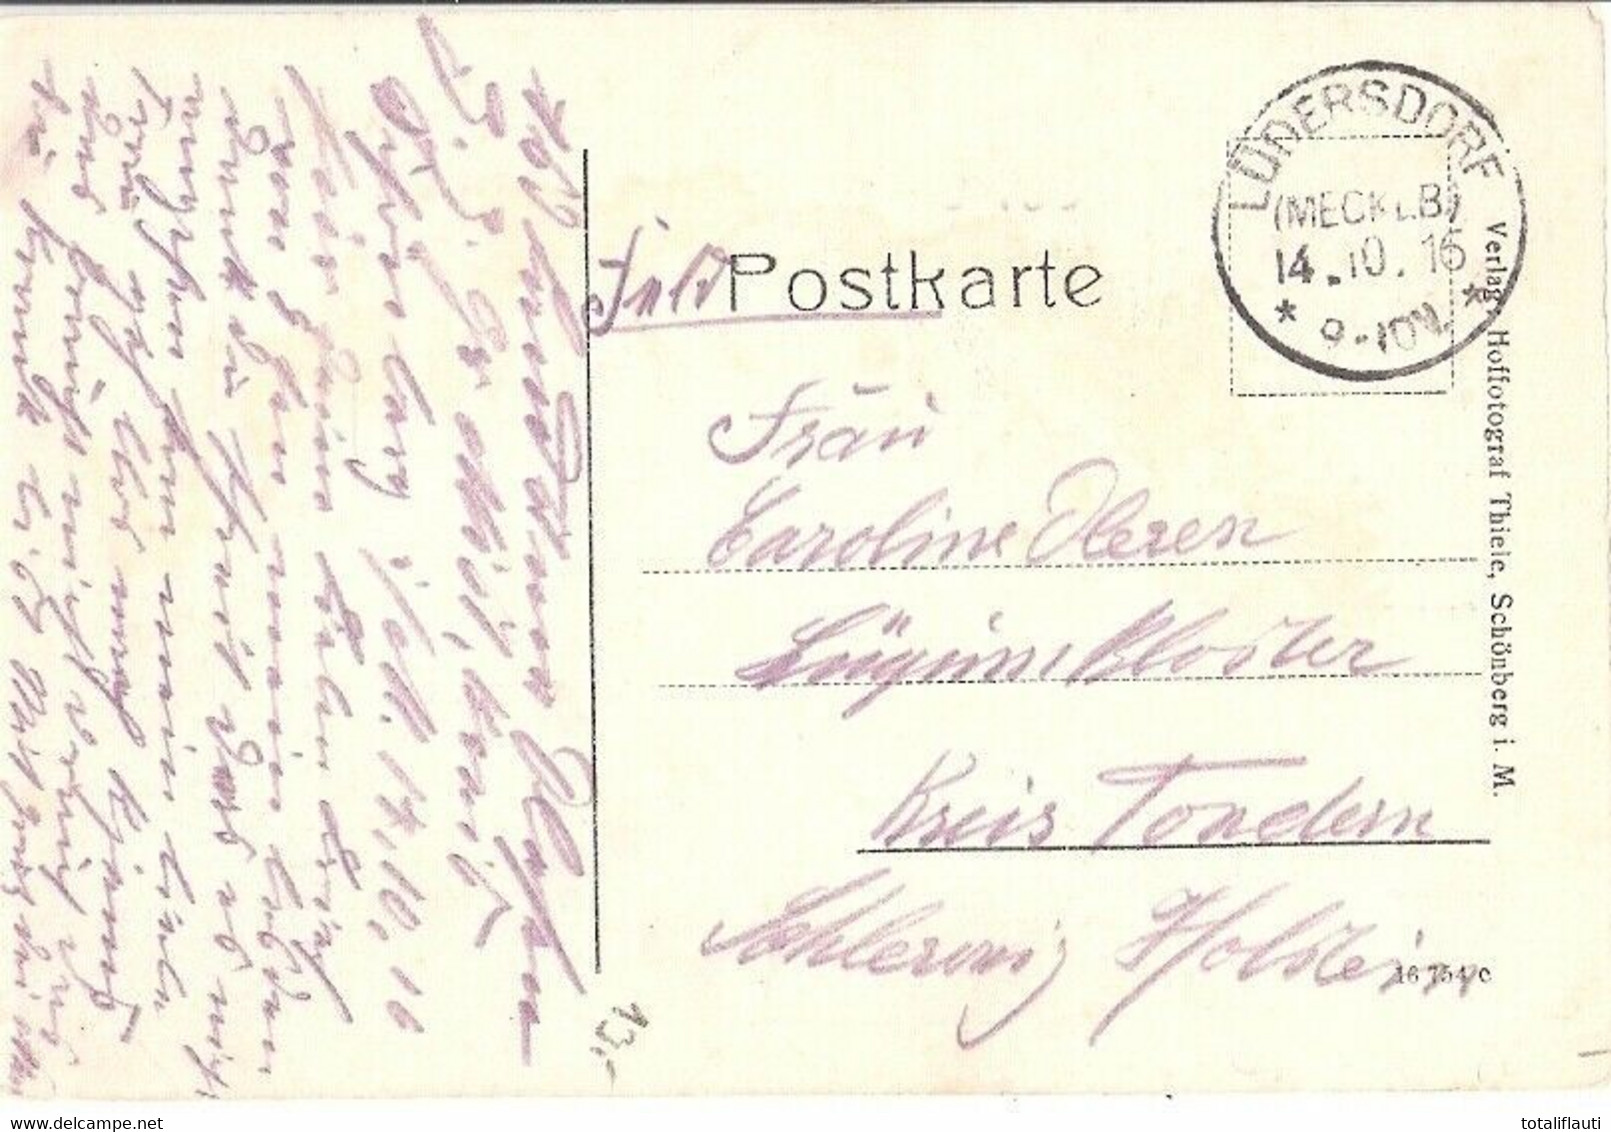 LÜDERSDORF Mecklenburg B Schönberg Hartsteinwerk Kolonialwarenladen Gelaufen Als Feldpost 14.10.1915 TOP-Erhaltung - Grevesmuehlen